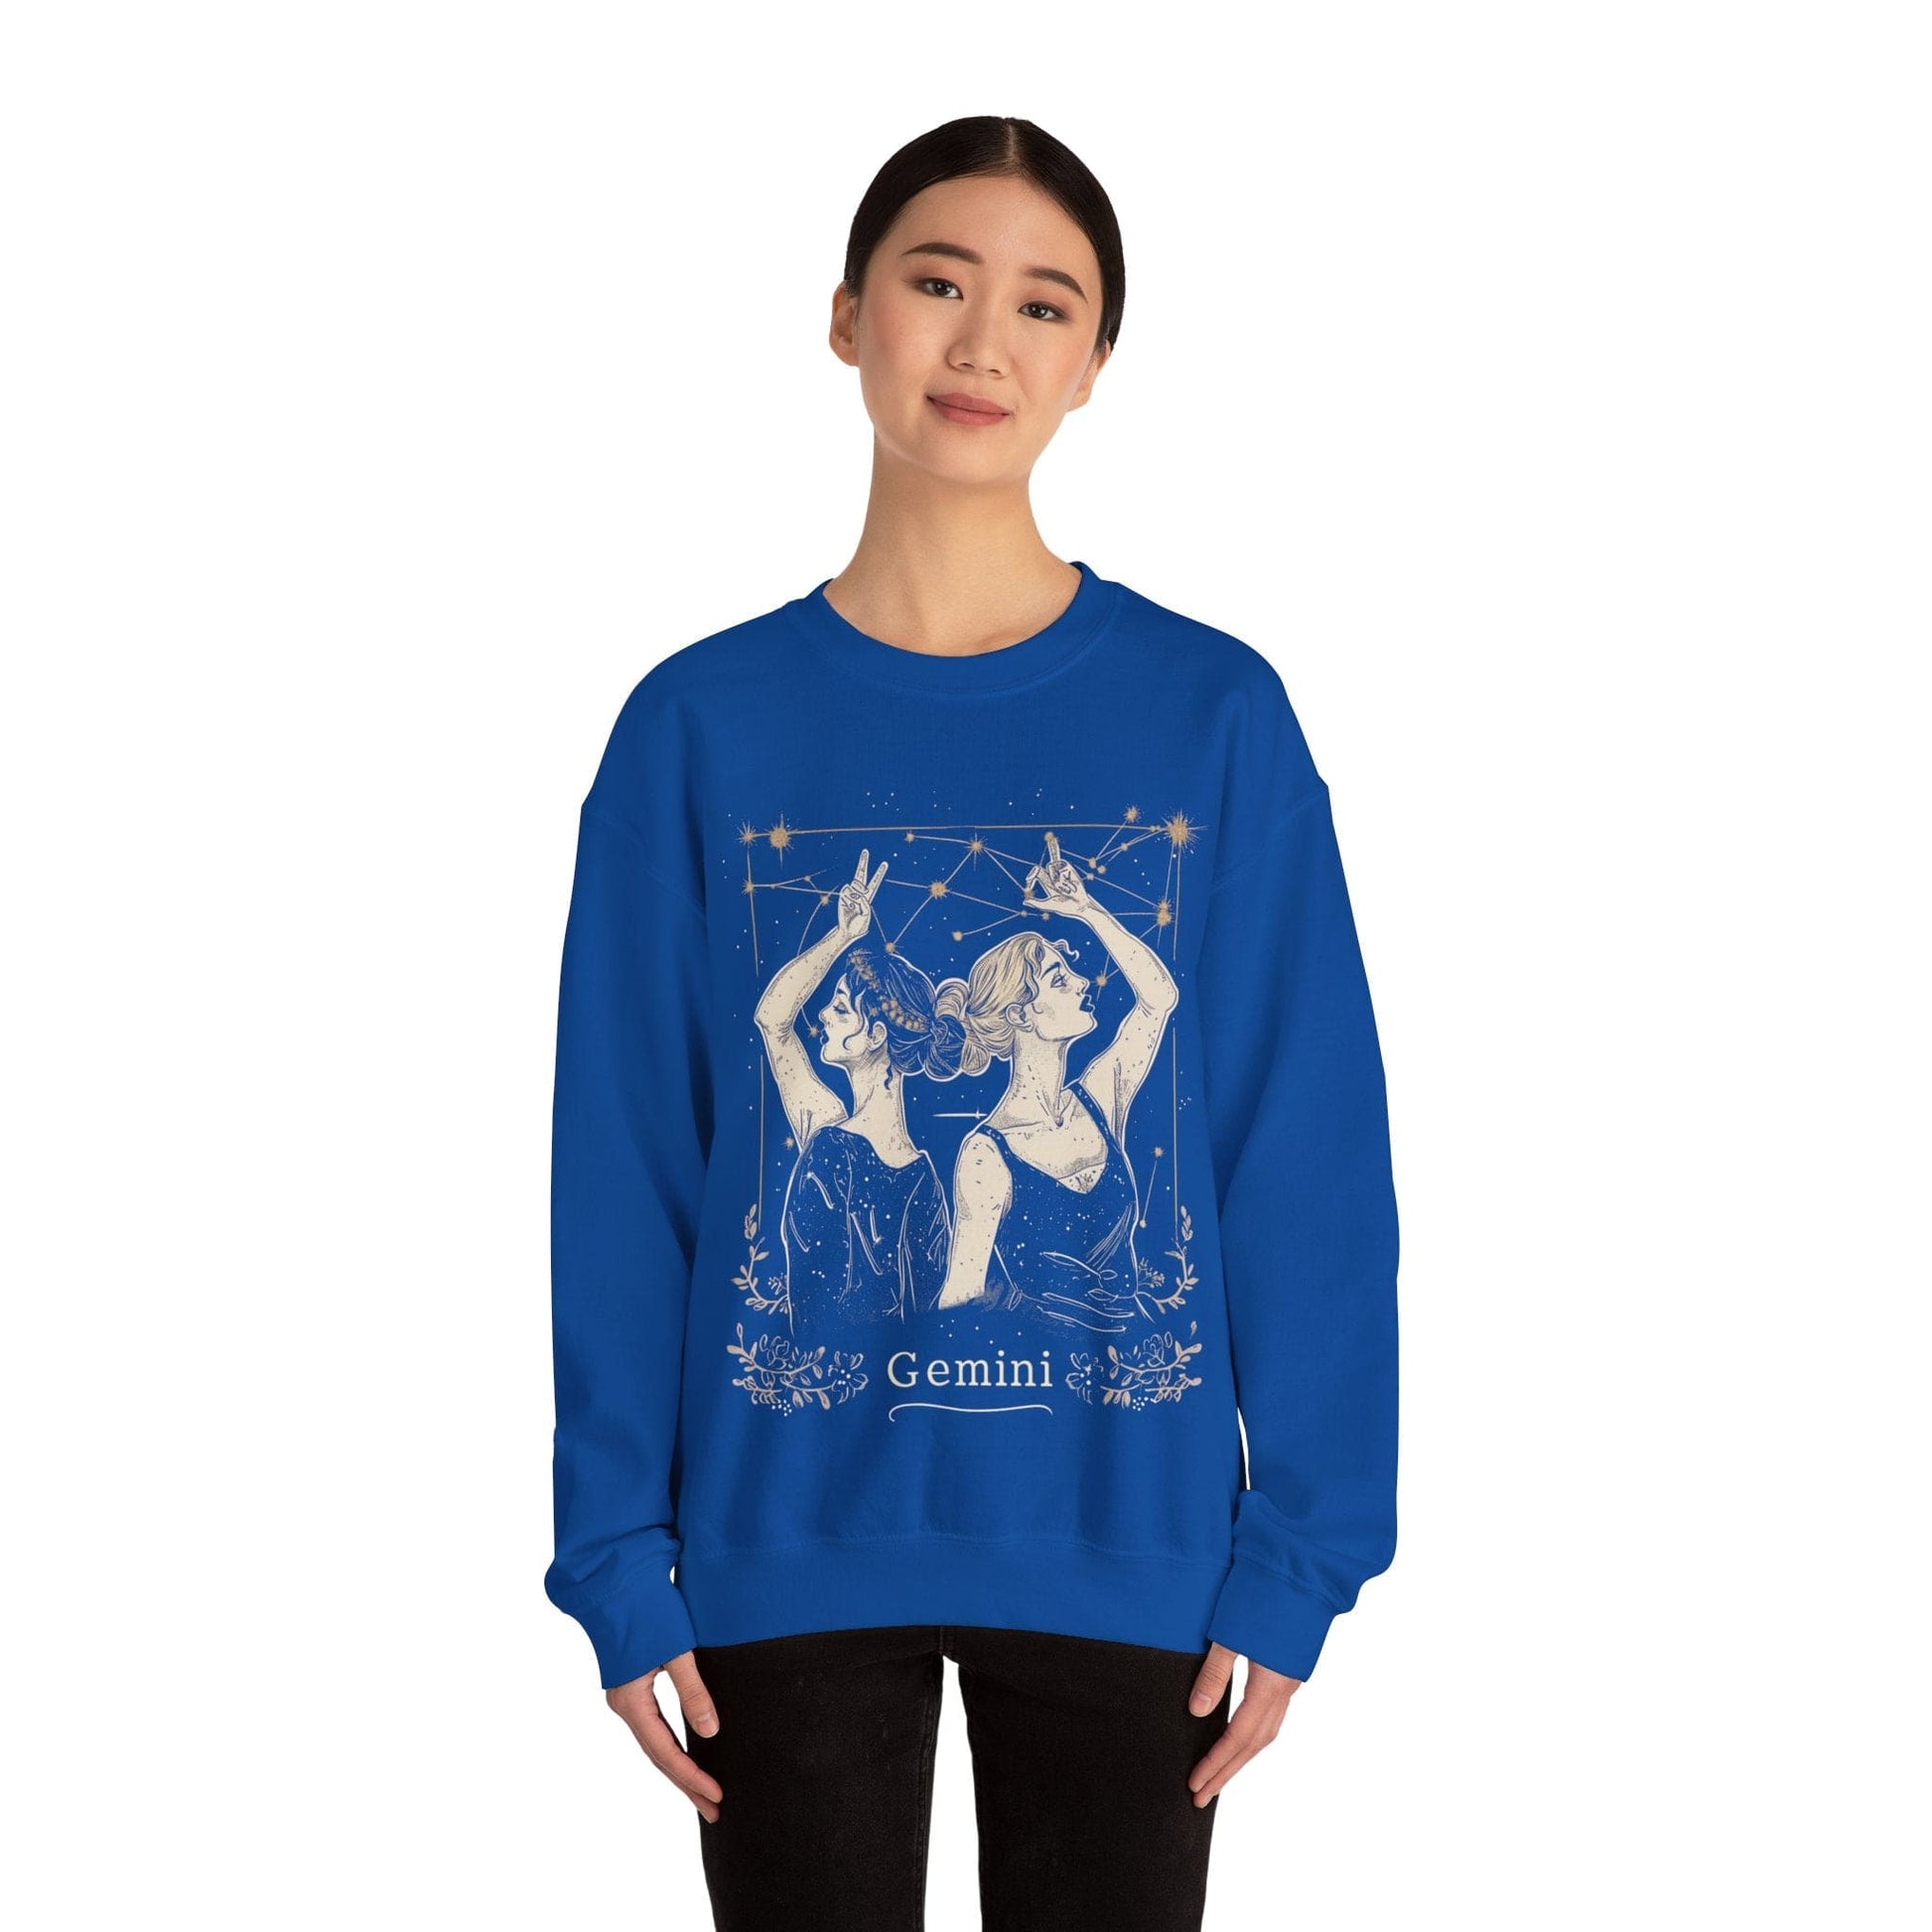 Sweatshirt Gemini Air Whisper Soft Sweater: Dual Shine for the Twin Sign